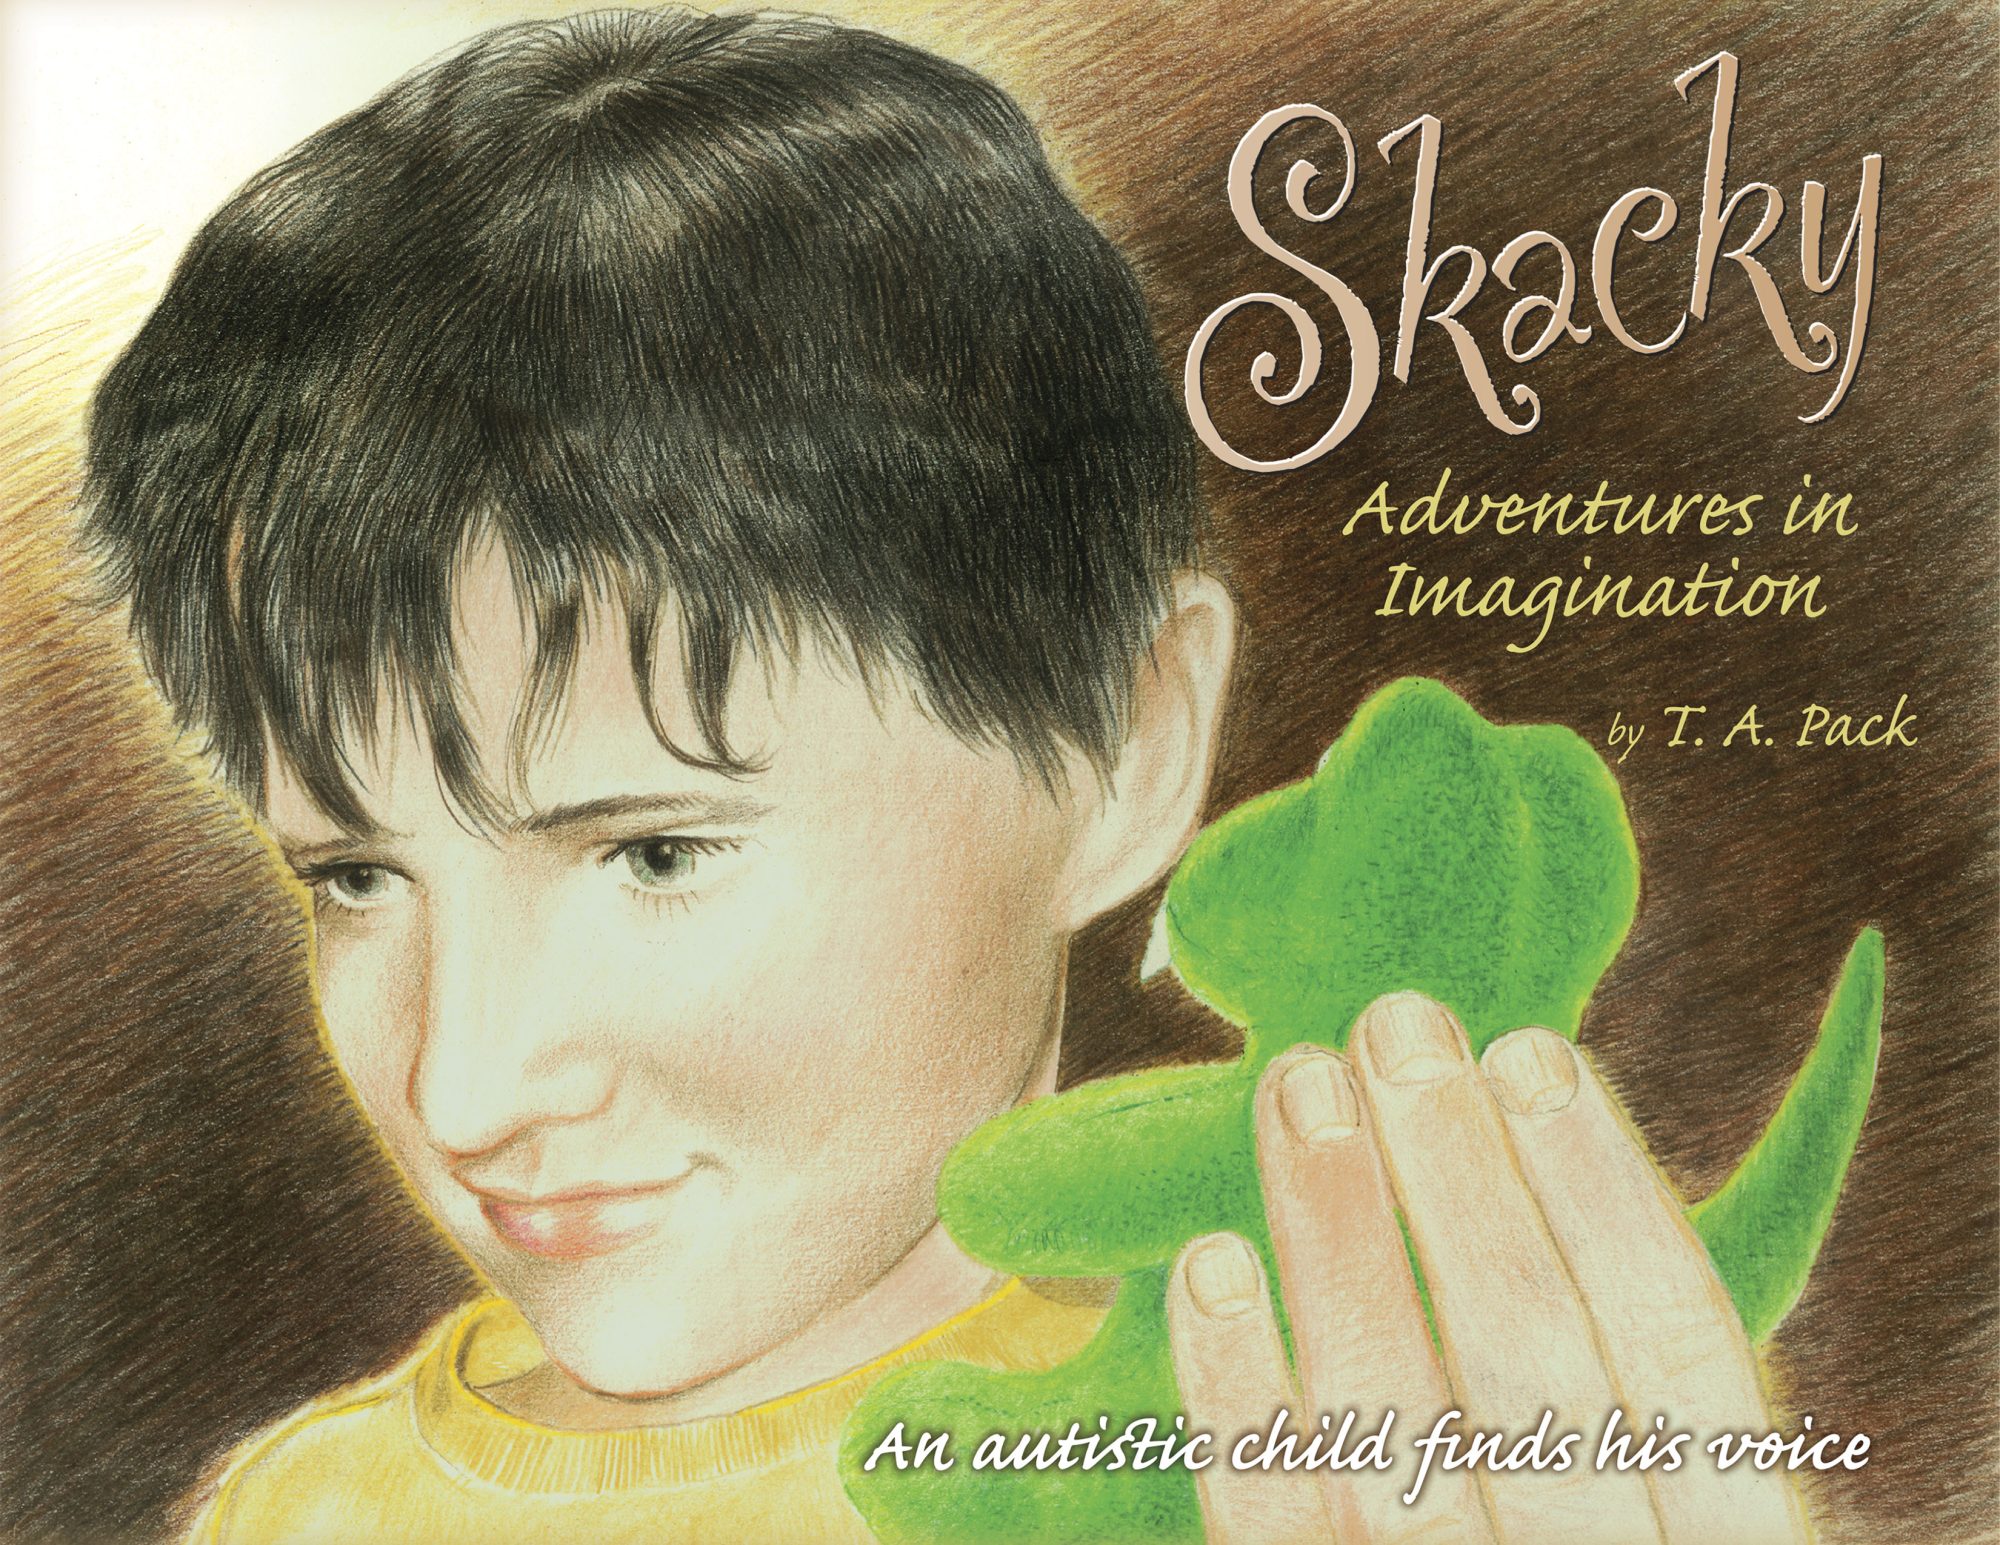 Skacky: Adventures in Imagination